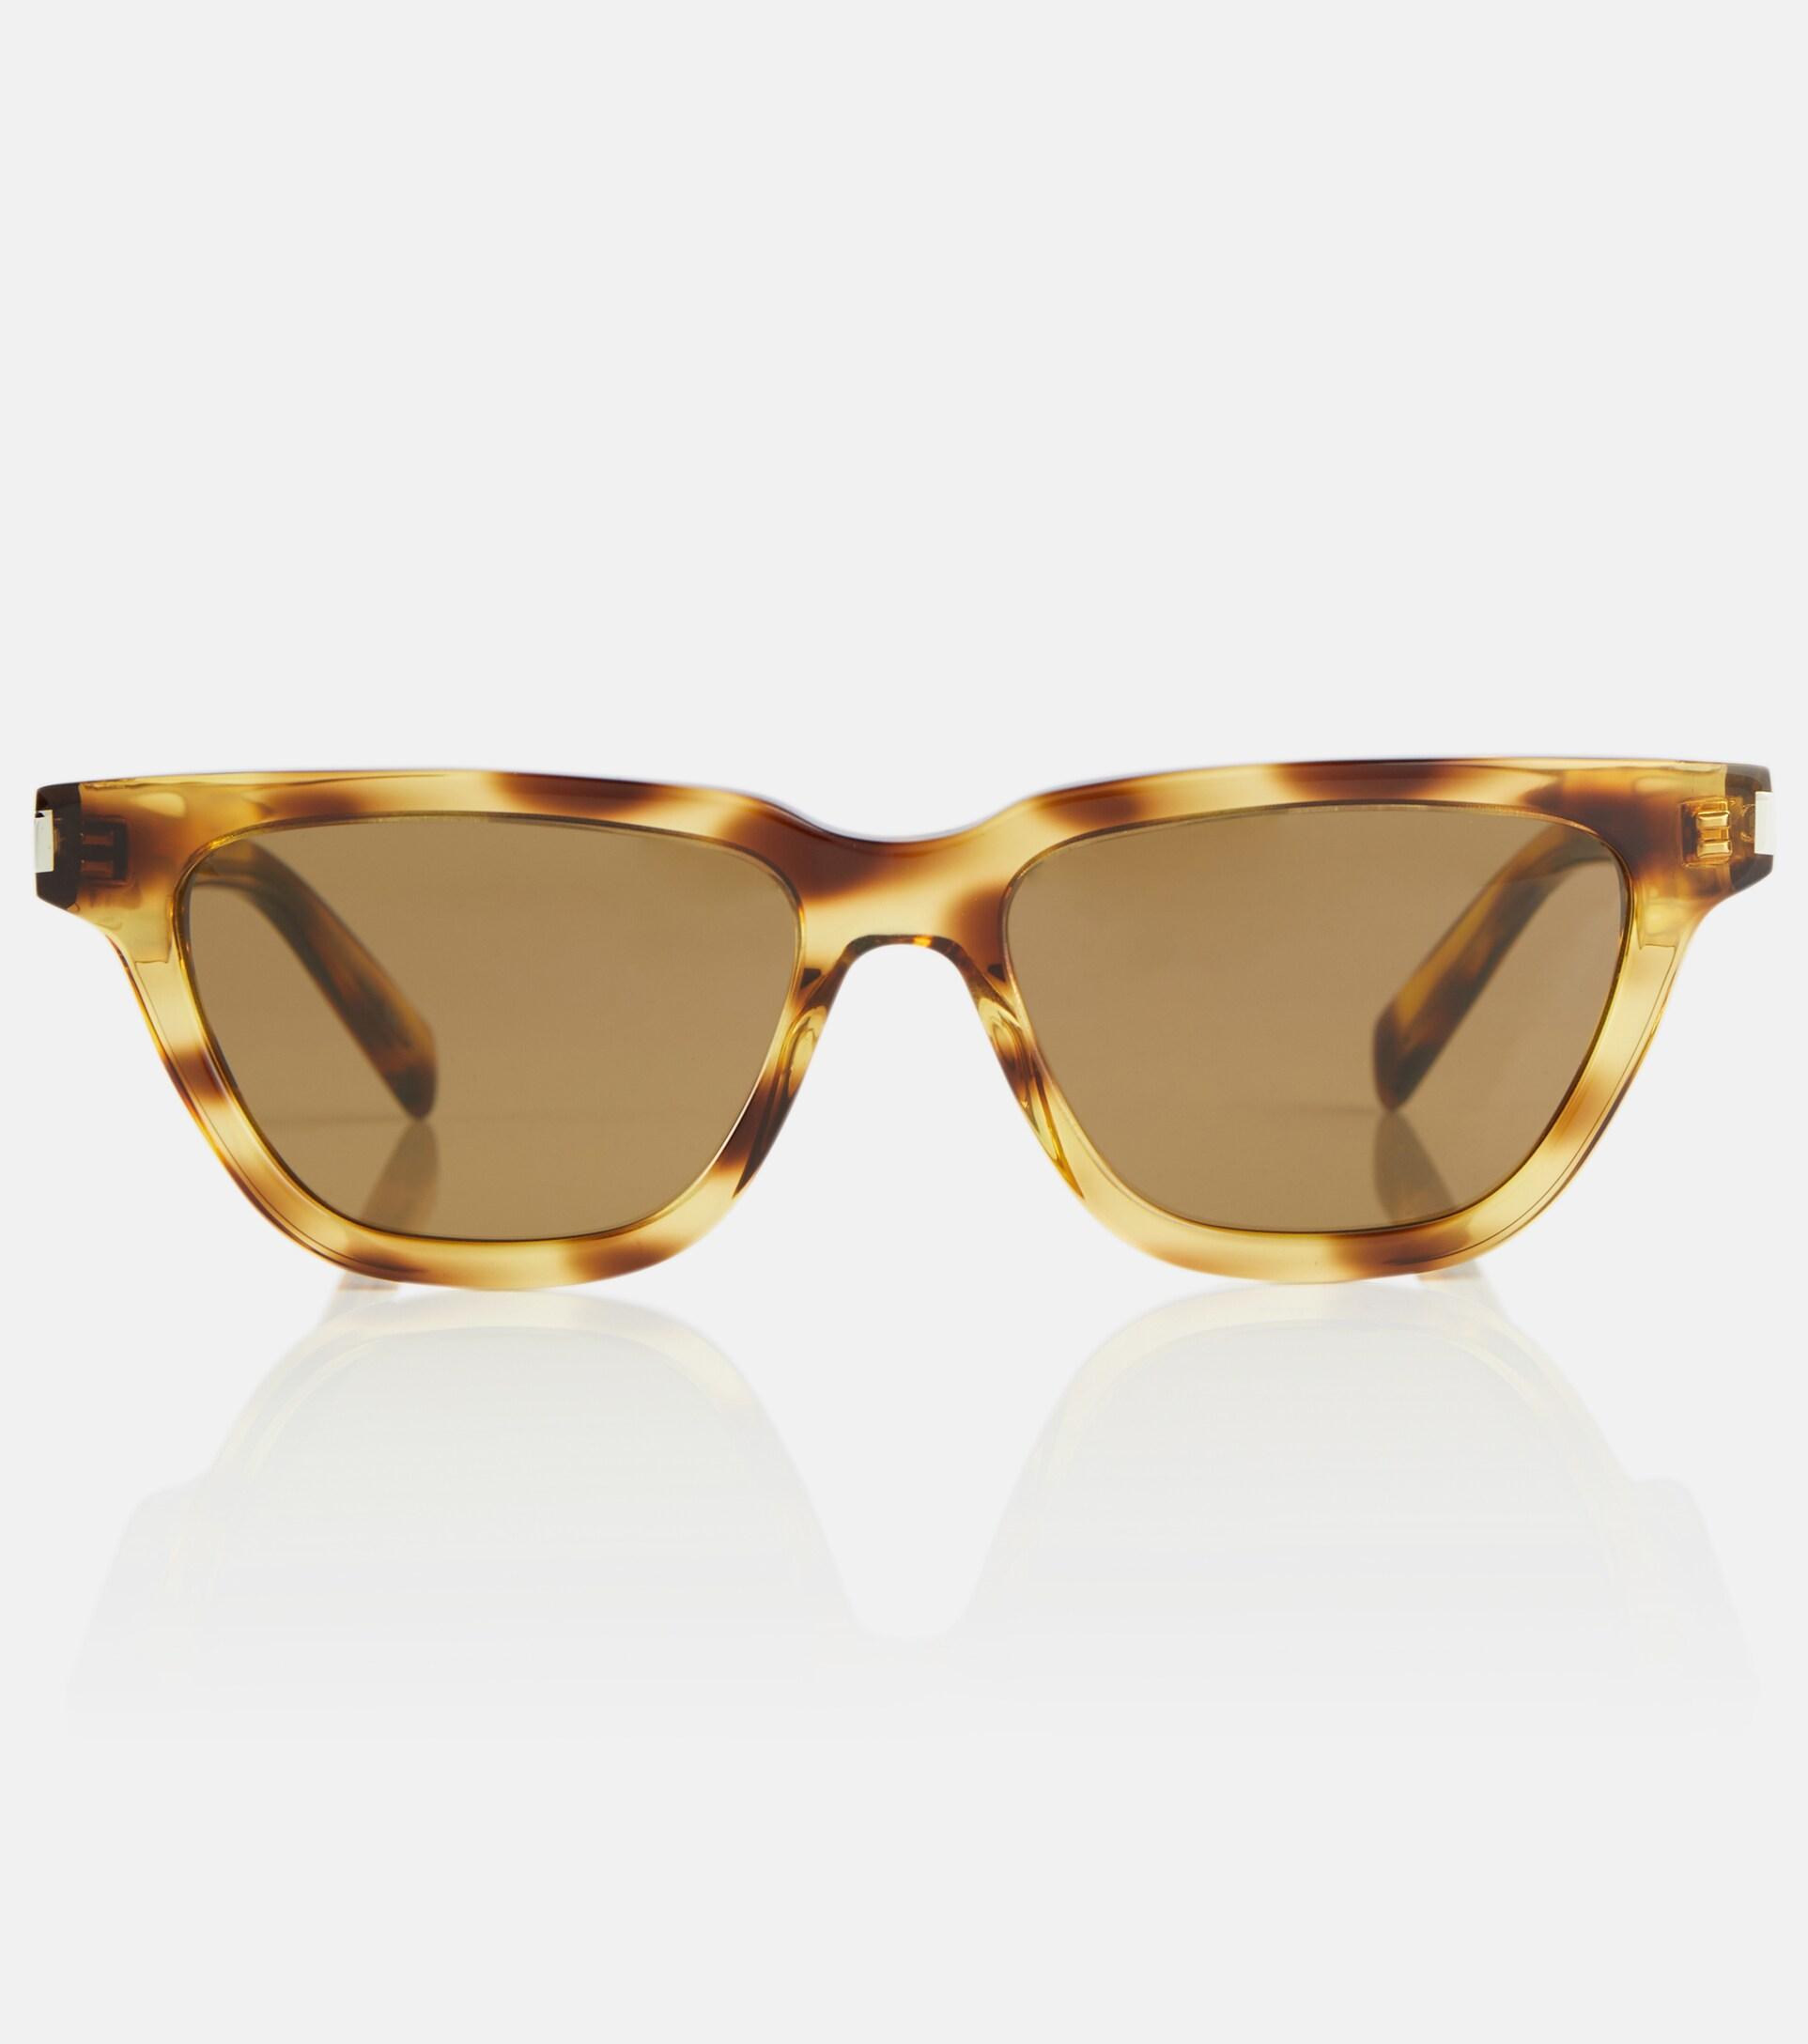 SL 462 Sulpice Cat Eye Sunglasses in Black - Saint Laurent